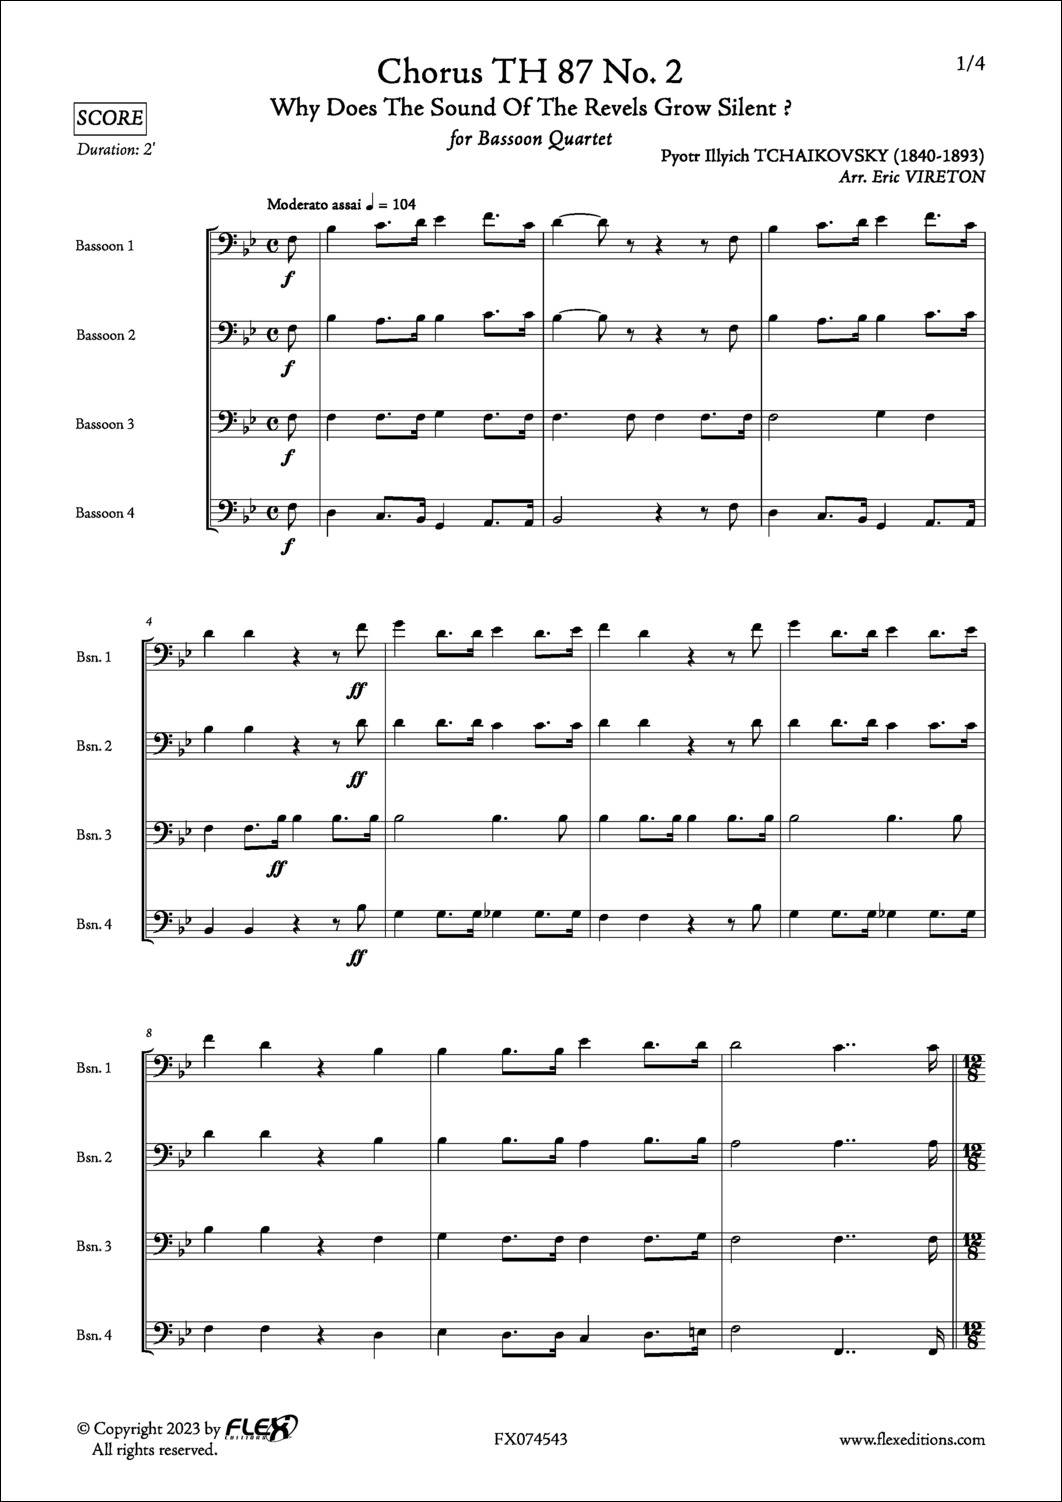 Choeur TH 87 No. 2 - P. I. TCHAIKOVSKY - <font color=#666666>Quatuor de Bassons</font>